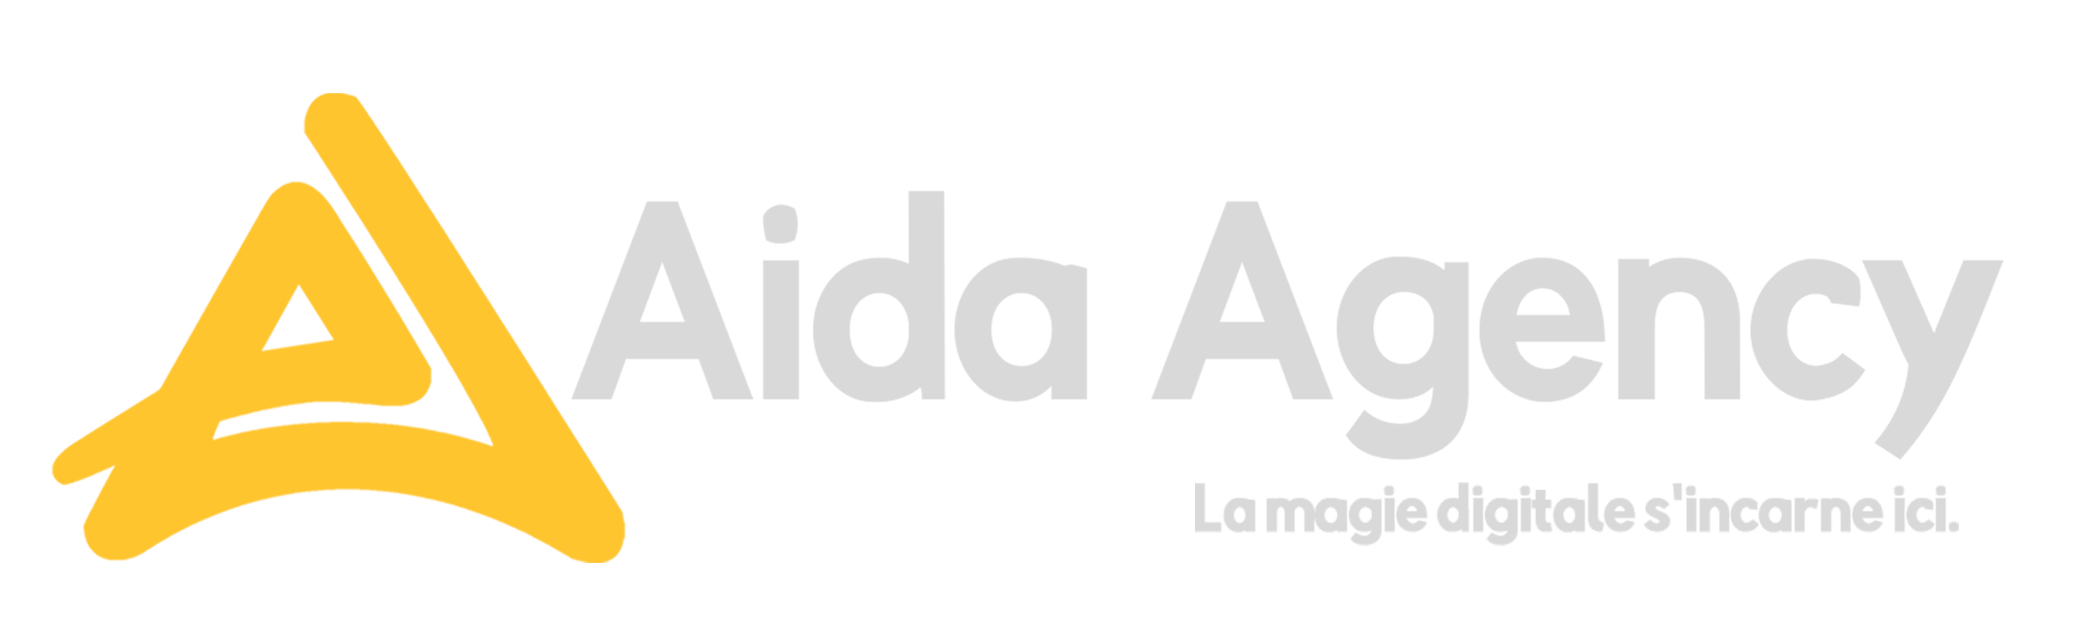 Aida Agence